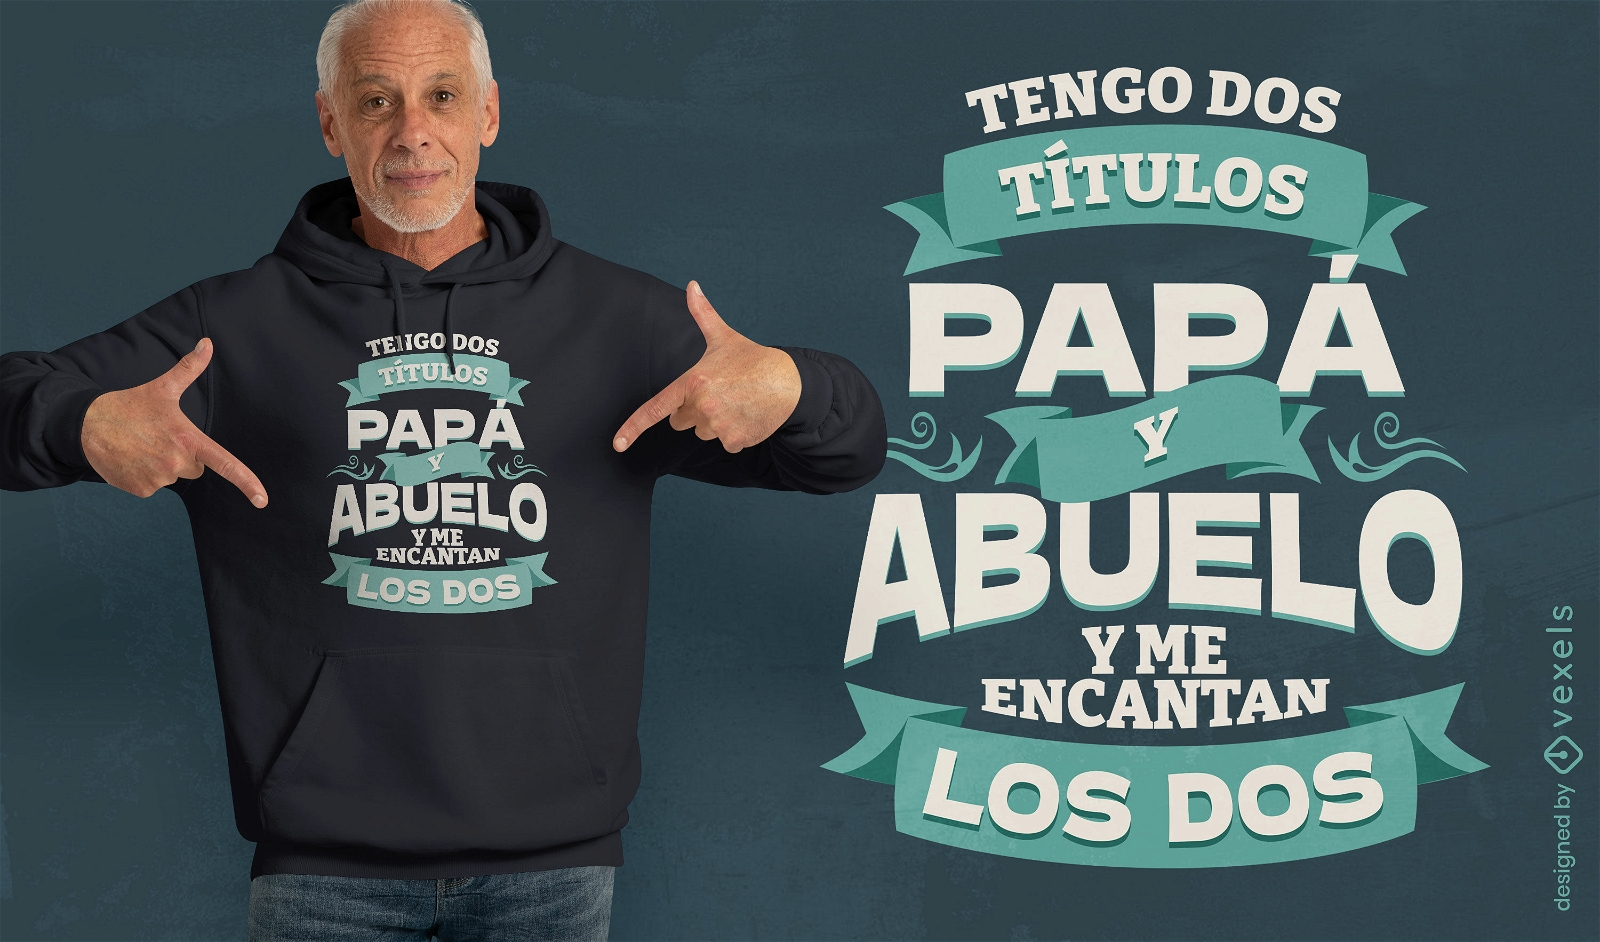 Dad and grandpa quote t-shirt design